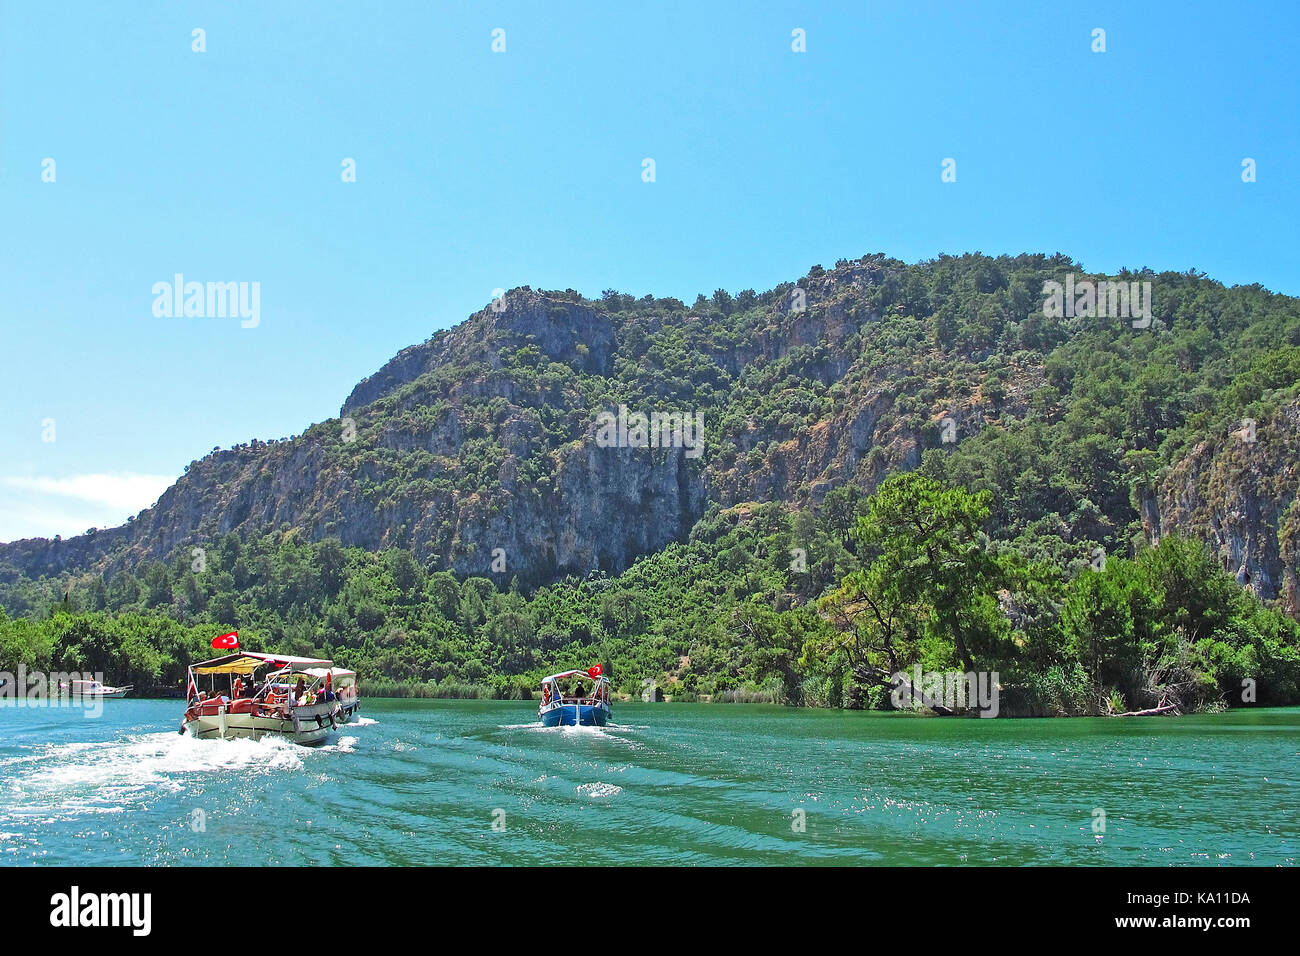 Excursion boats on Dalyan River, Turkey Stock Photo